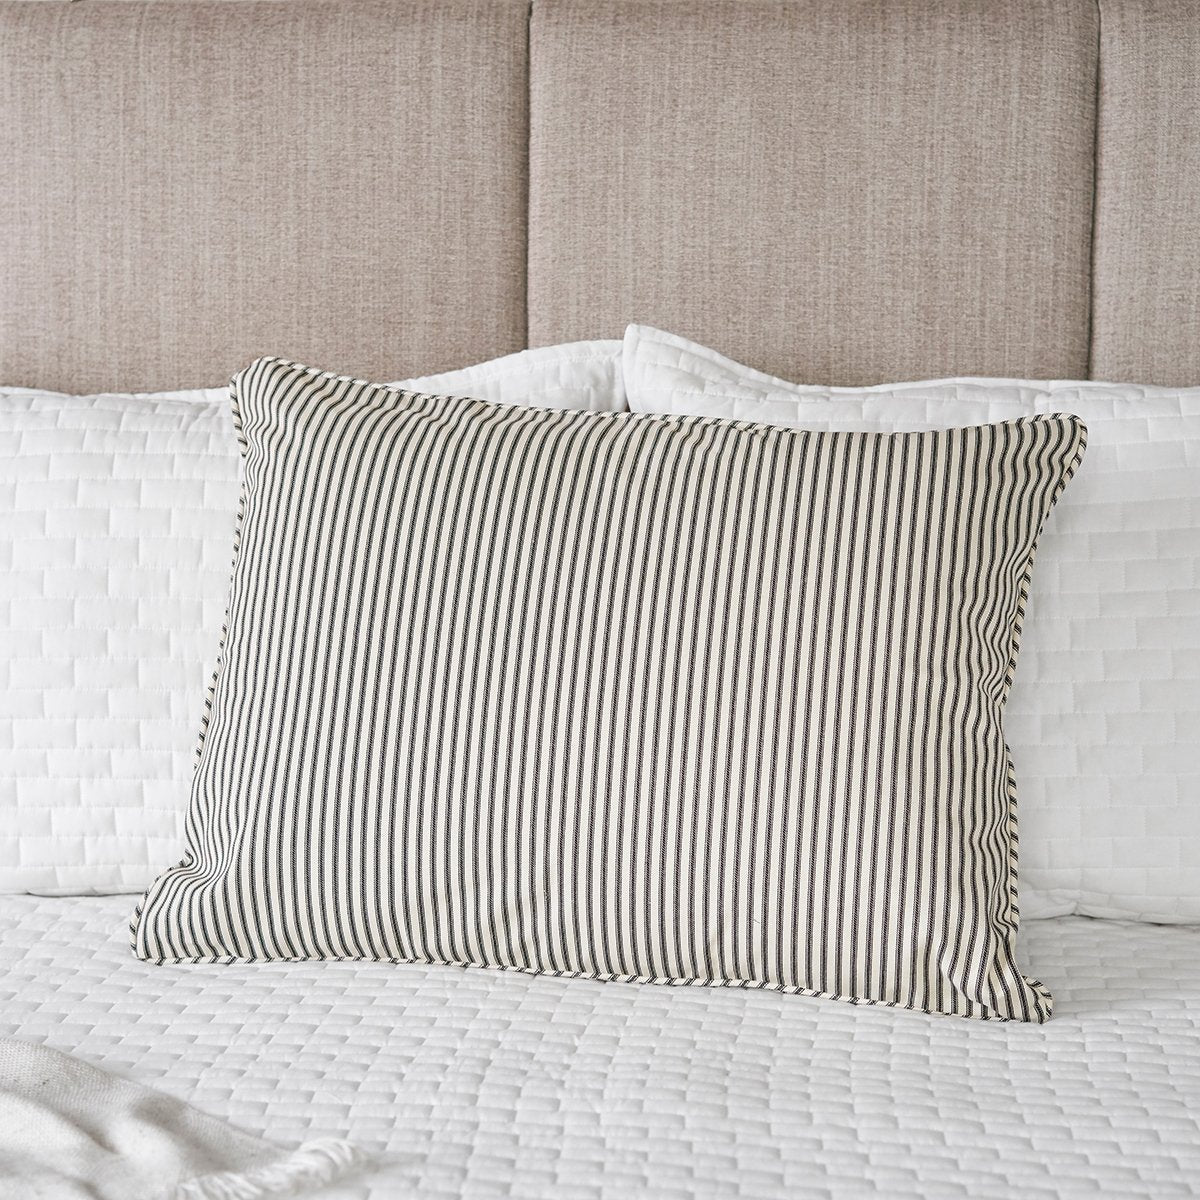 Ticking Stripe Pillow Sham |  Standard Size Black